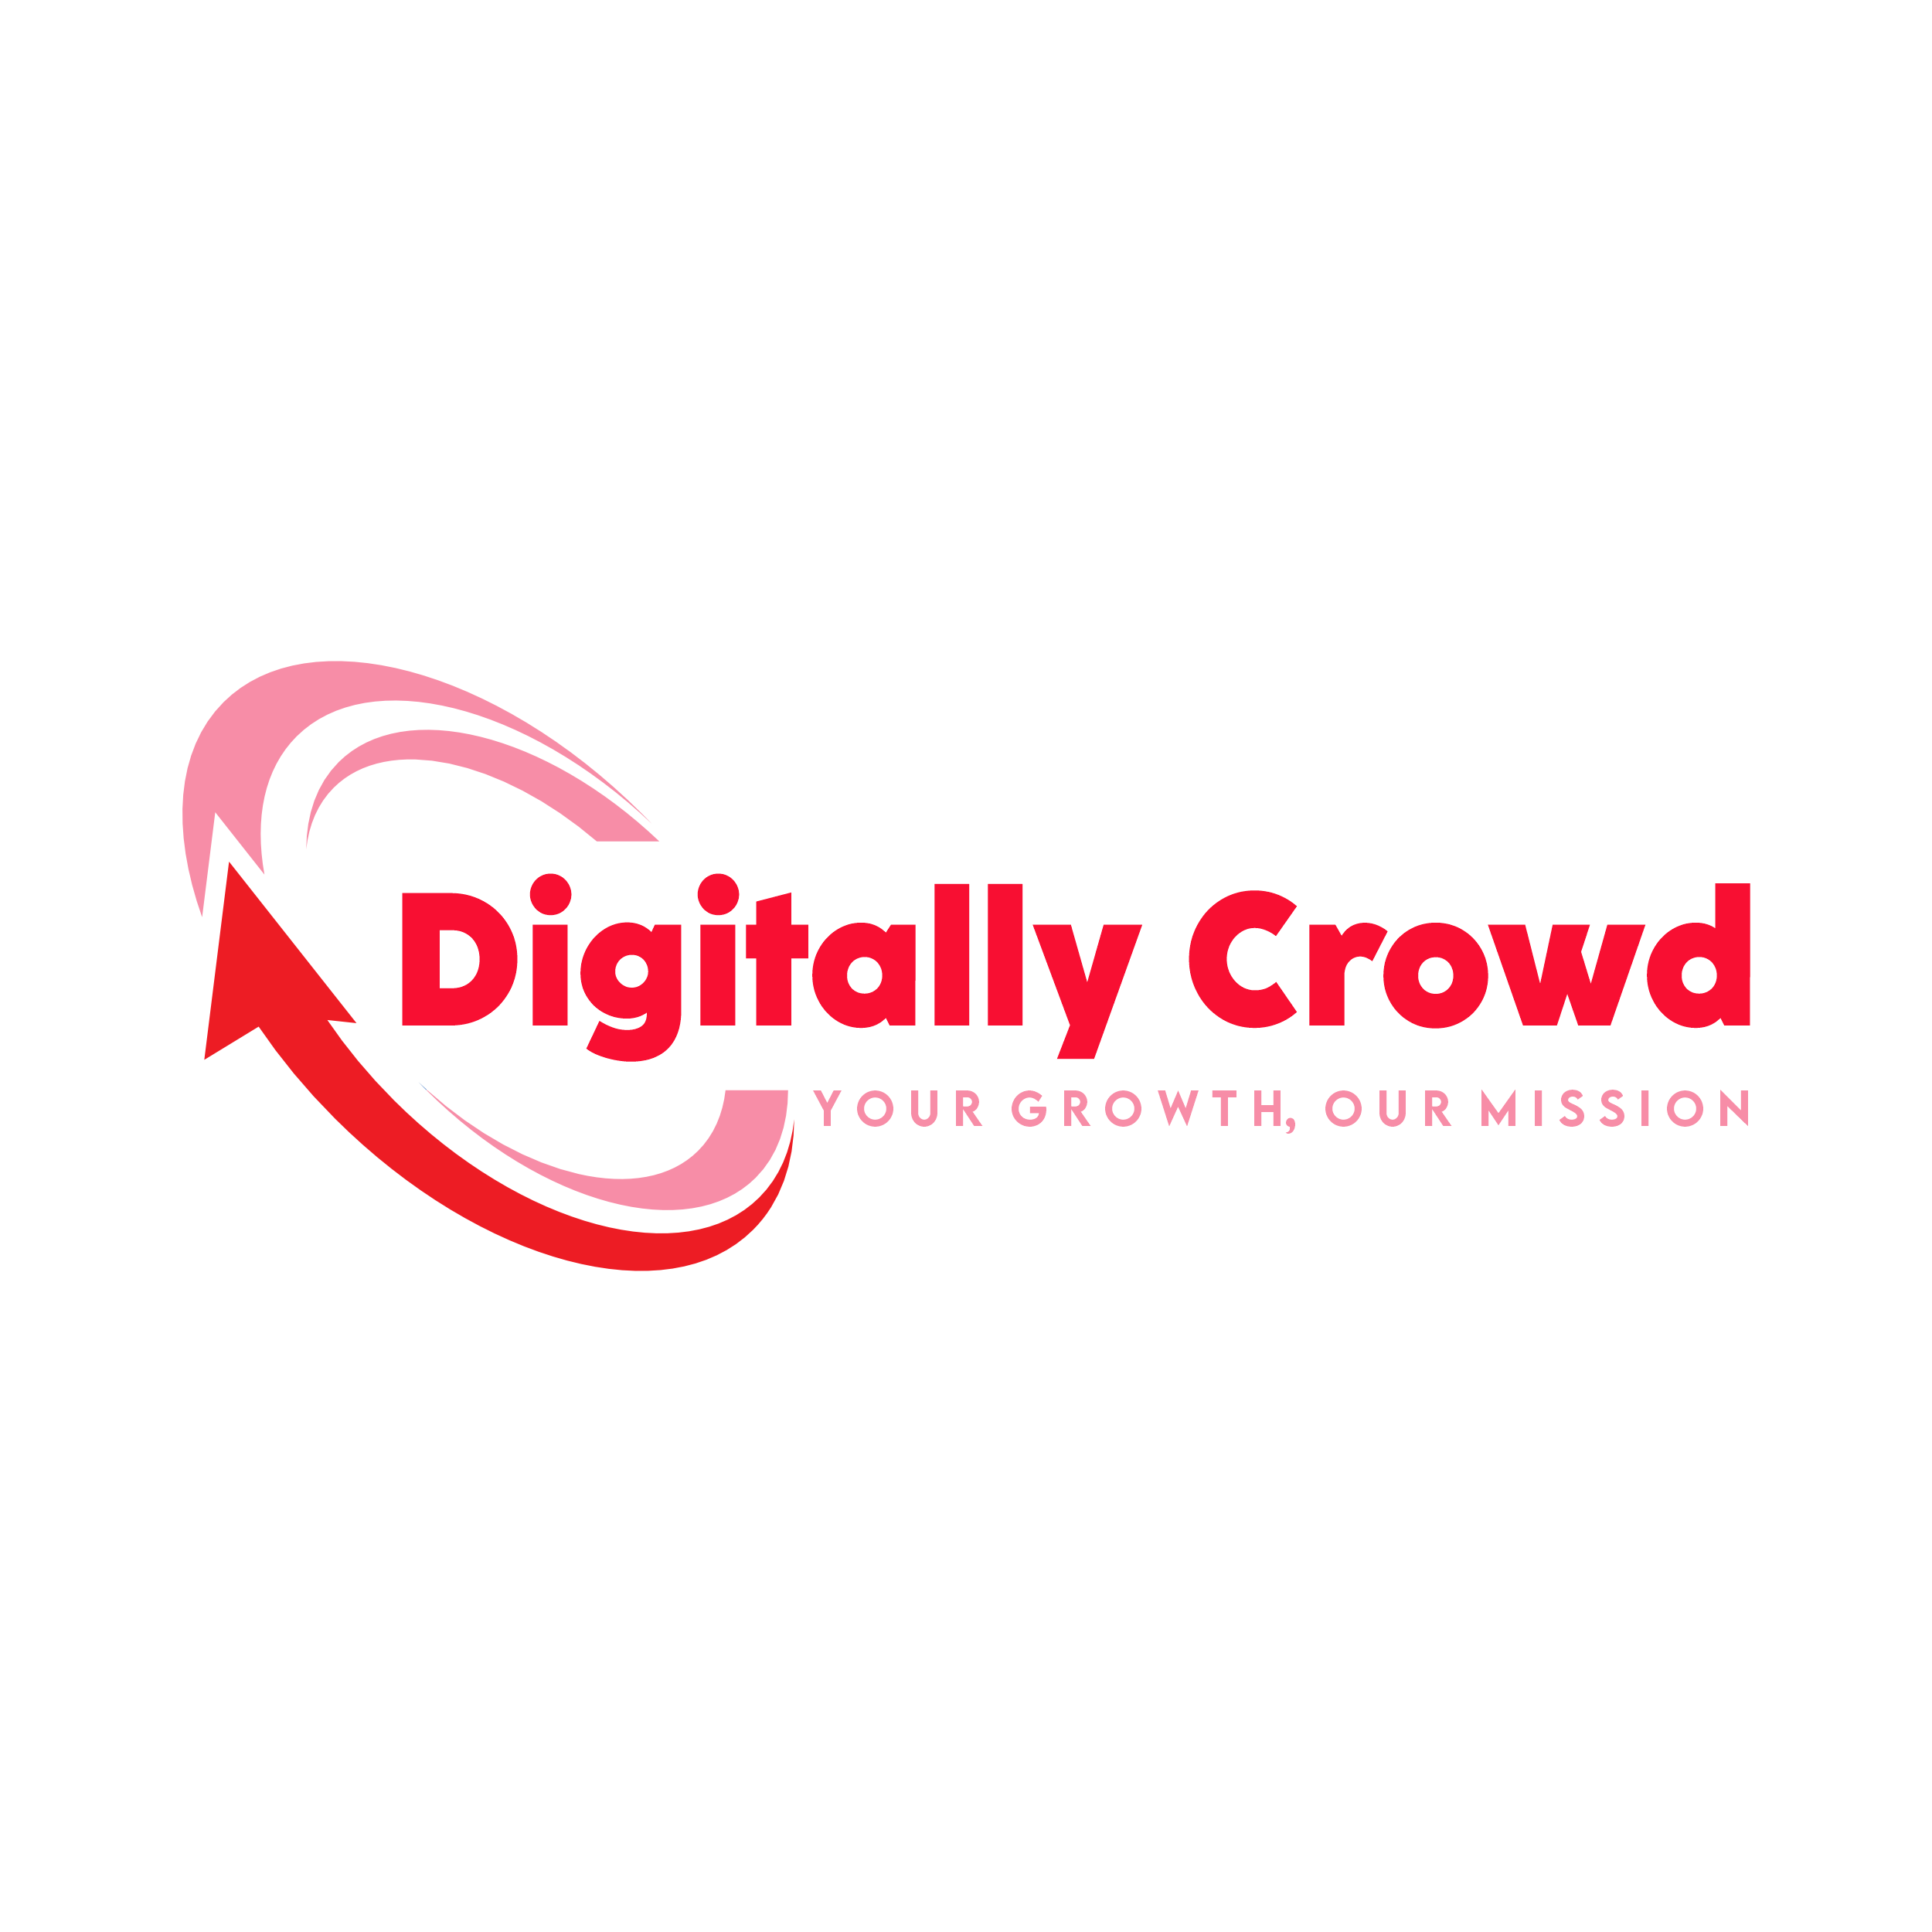 Best Digital Marketing Agency In Delhi